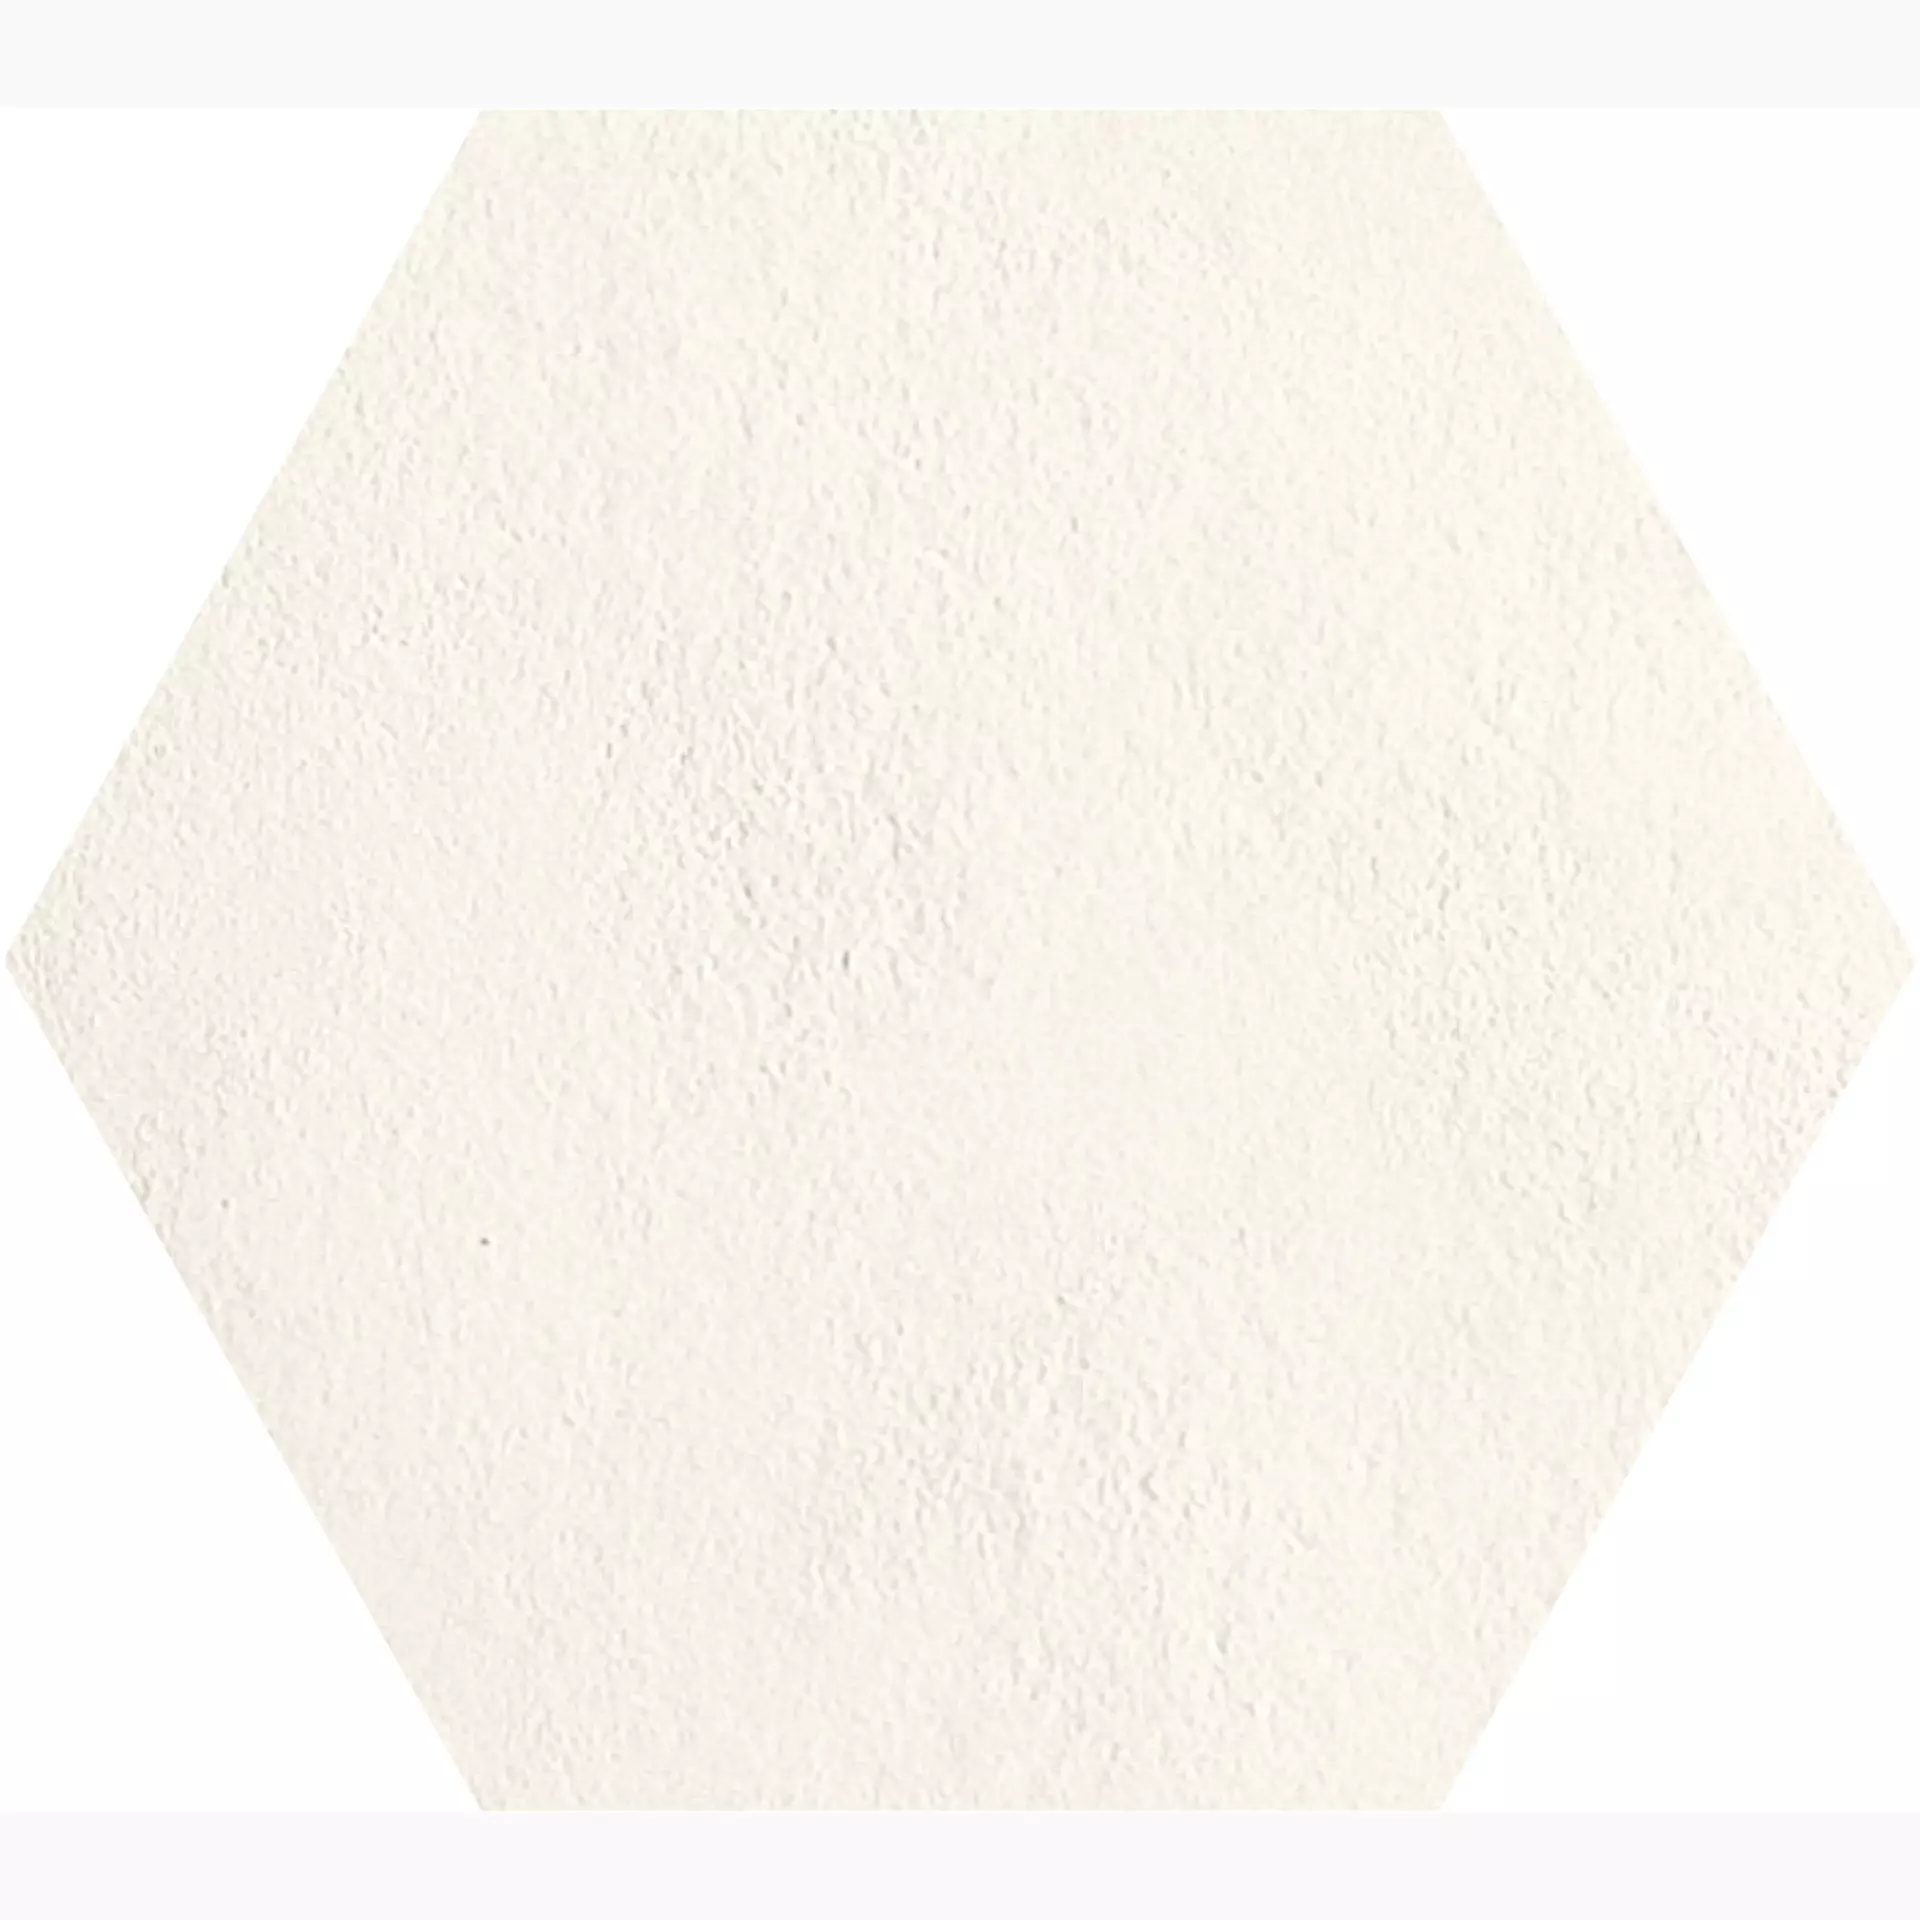 Gigacer Light Bianco Roccia Decor Small Hexagon PO9ESAROCCIA 16x18cm 6mm